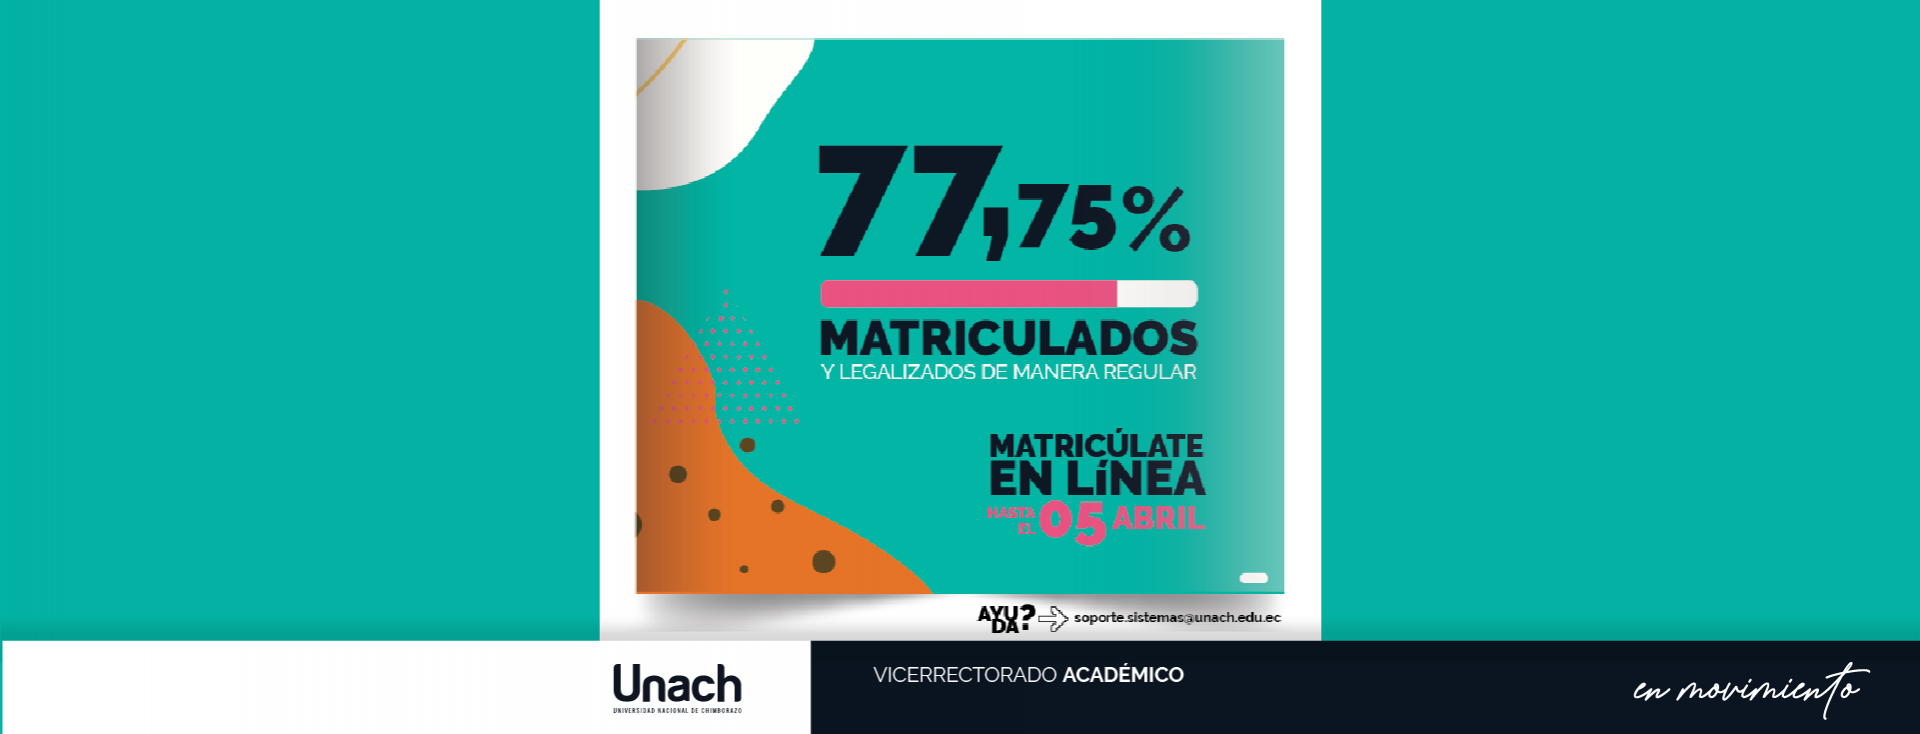 77,75%   DE ESTUDIANTES MATRICULADOS